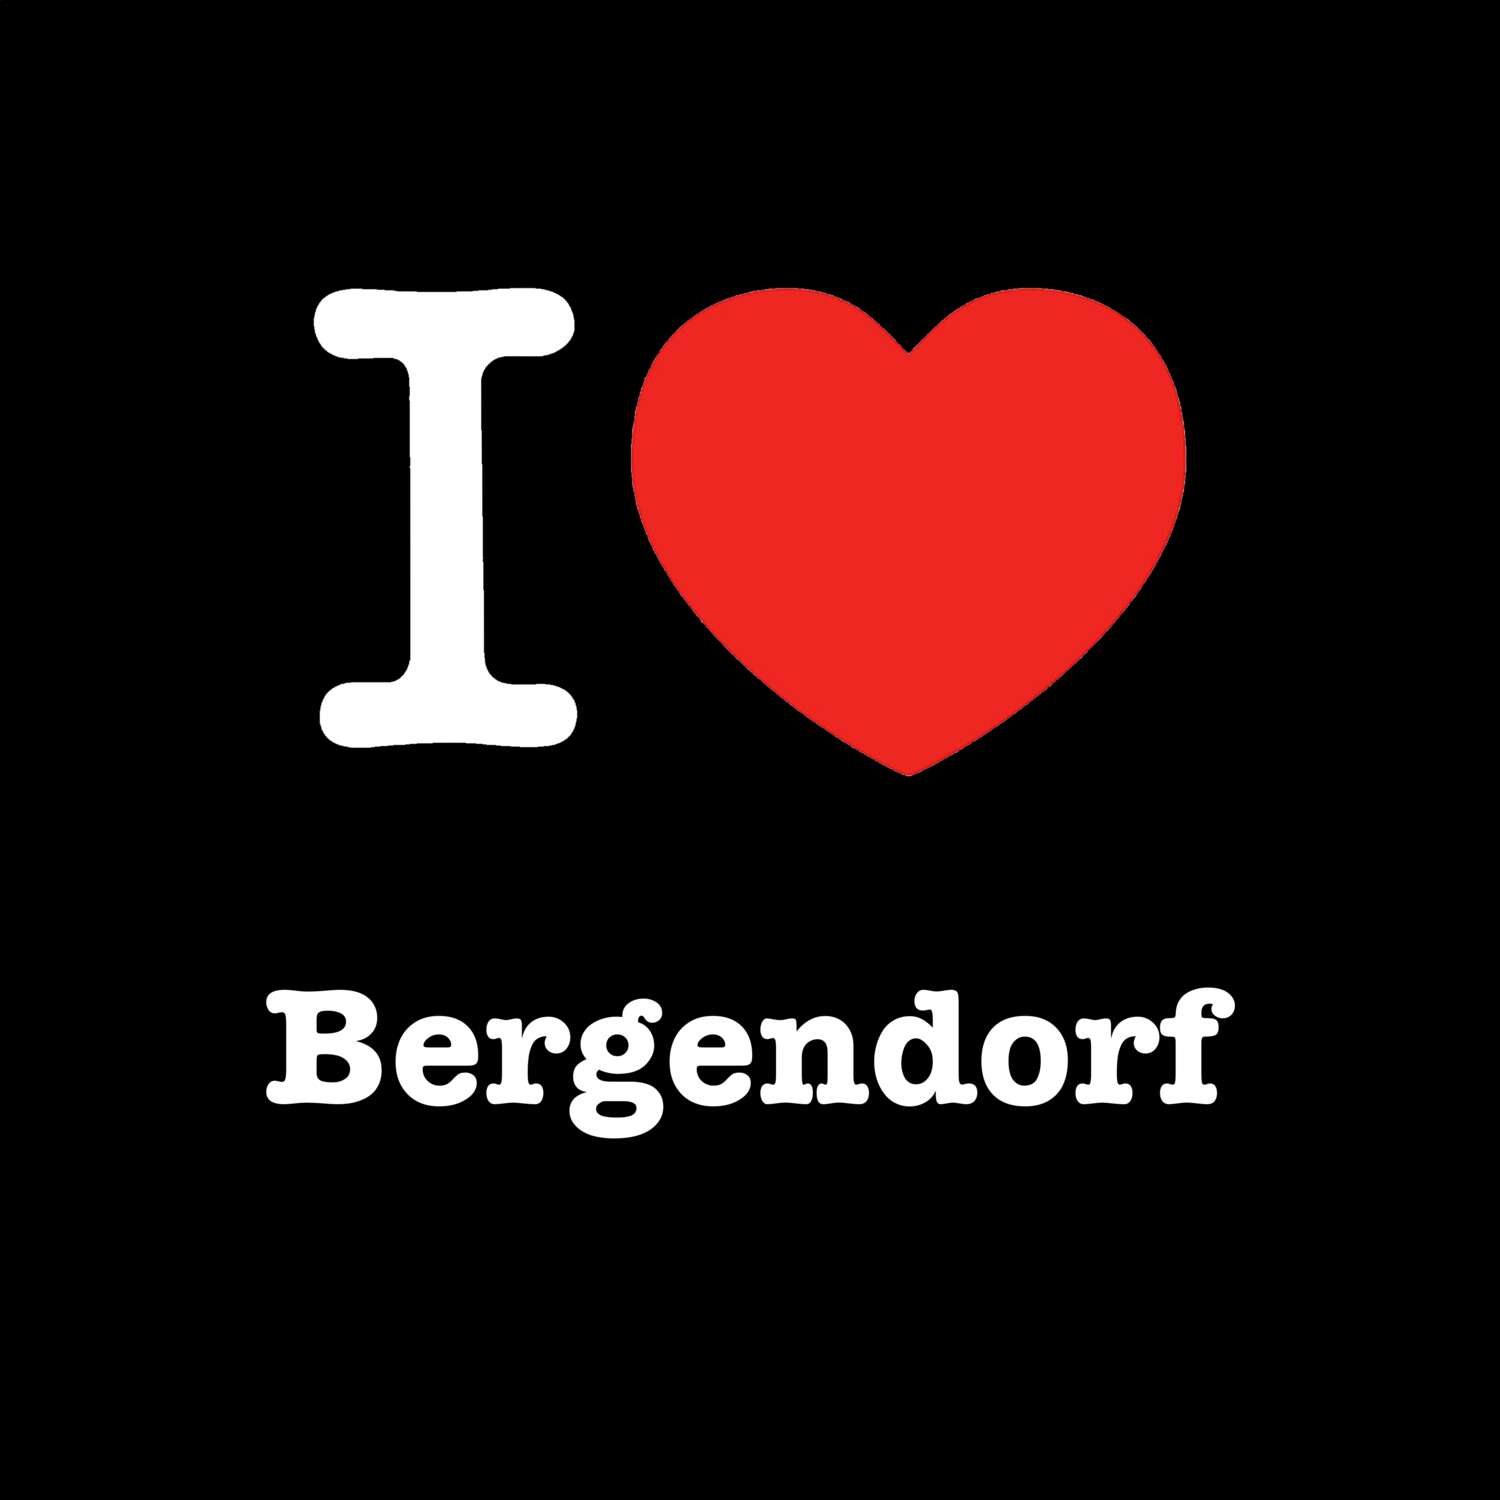 Bergendorf T-Shirt »I love«